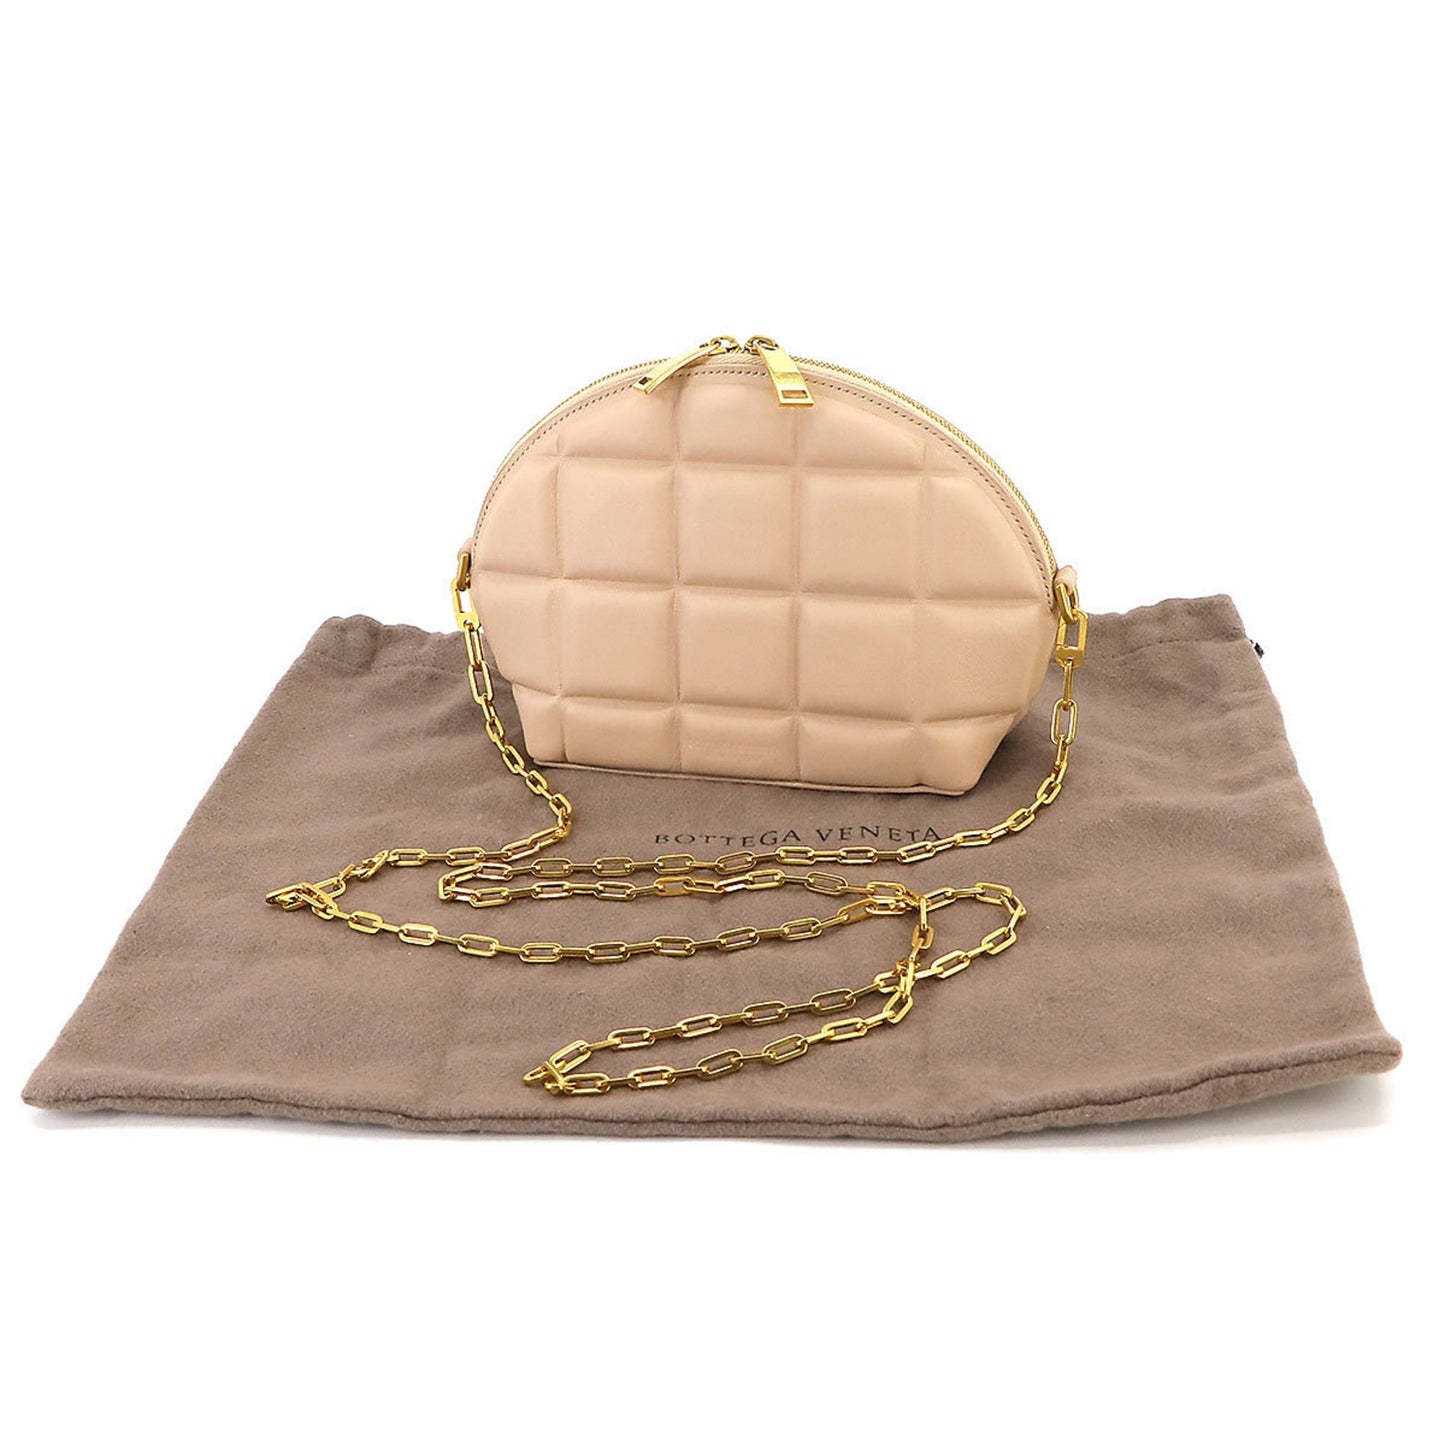 Bottega Veneta Women's Beige Leather Half-Moon Shoulder Bag in Beige